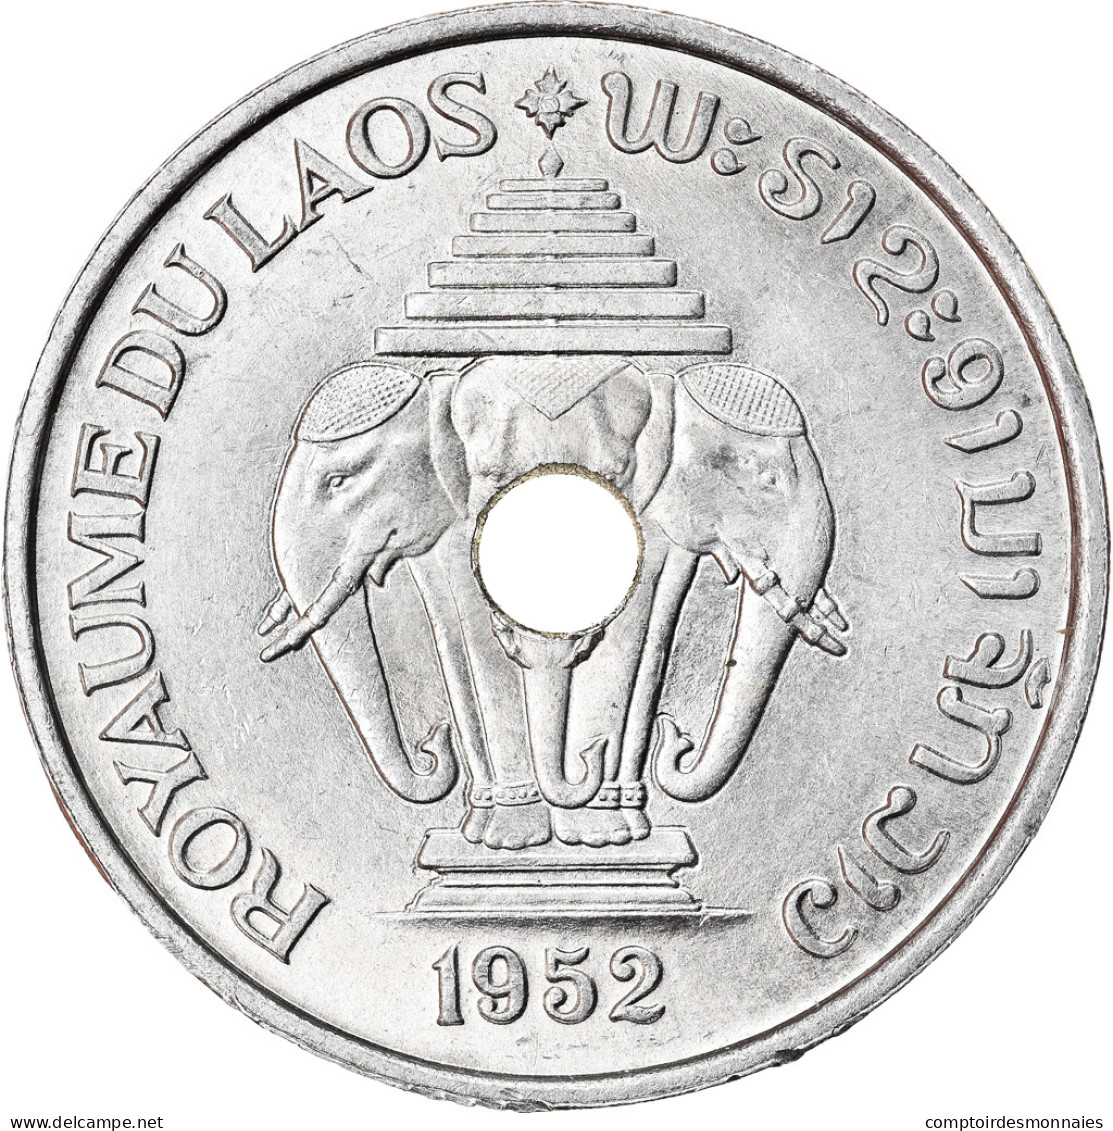 Laos, Royaume, 20 Cents 1952, KM 5 - Laos